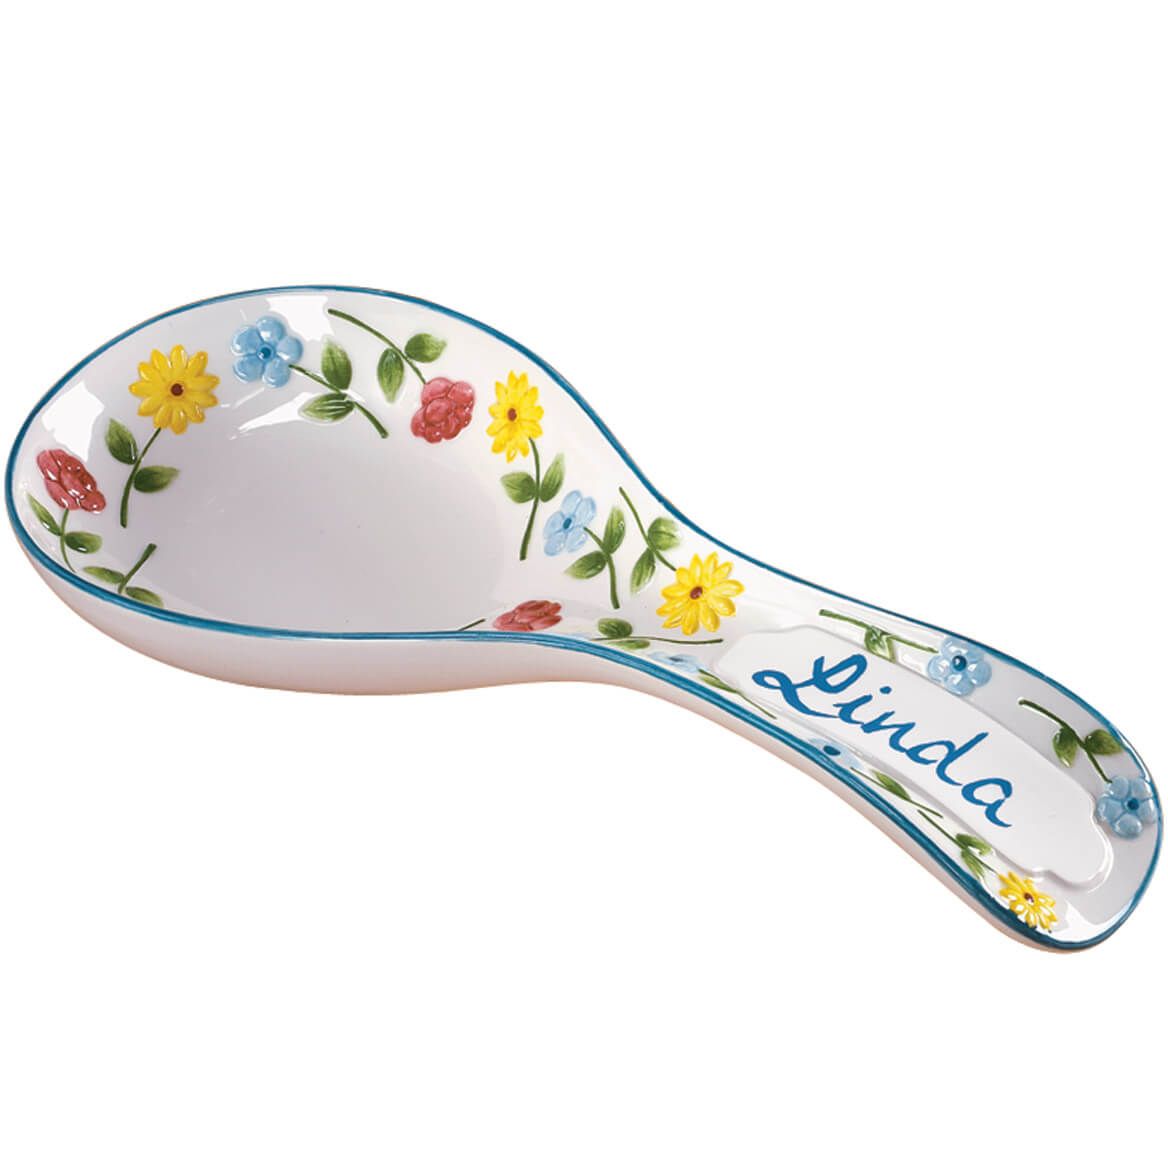 Personalized Flower Spoon Rest + '-' + 311557